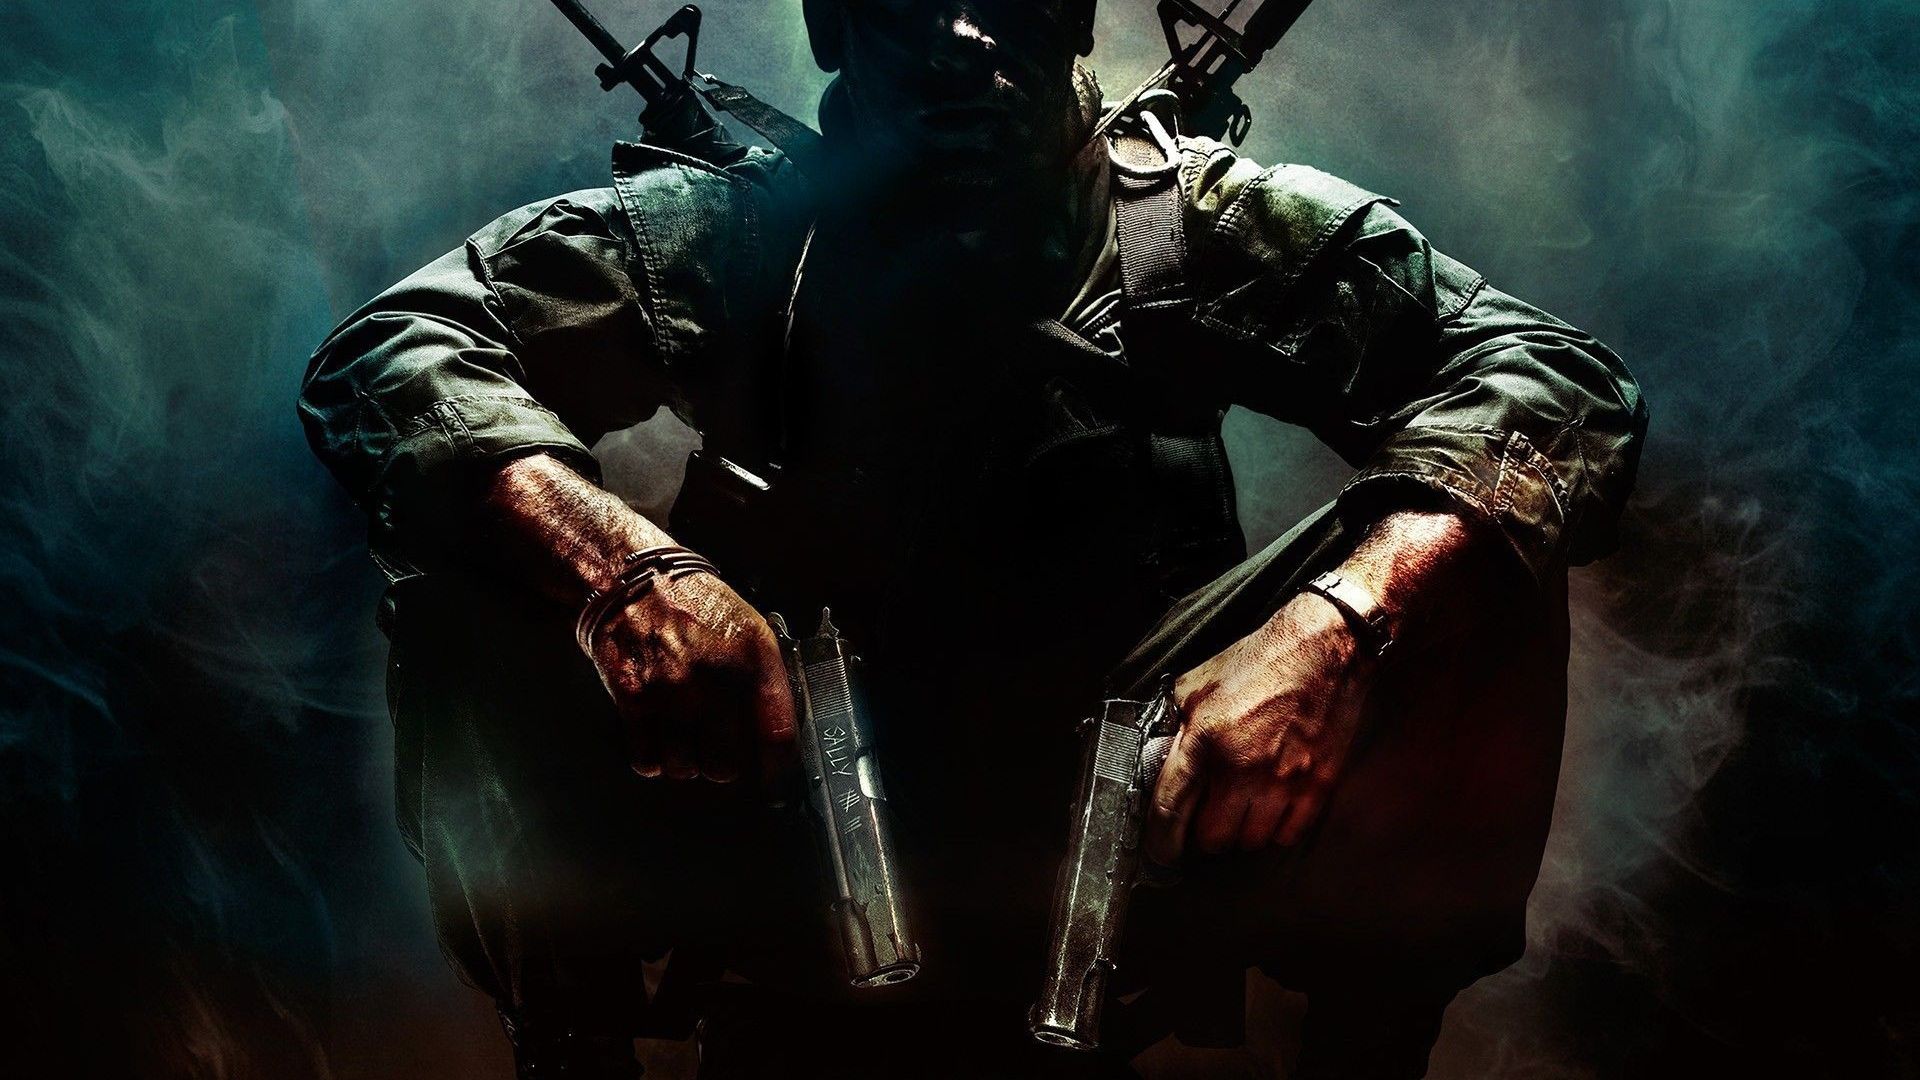 Desktop Wallpaper Call Of Duty: Black Ops Iii Video Game, Solider, Gun, Hd  Image, Picture, Background, Ymtwbp